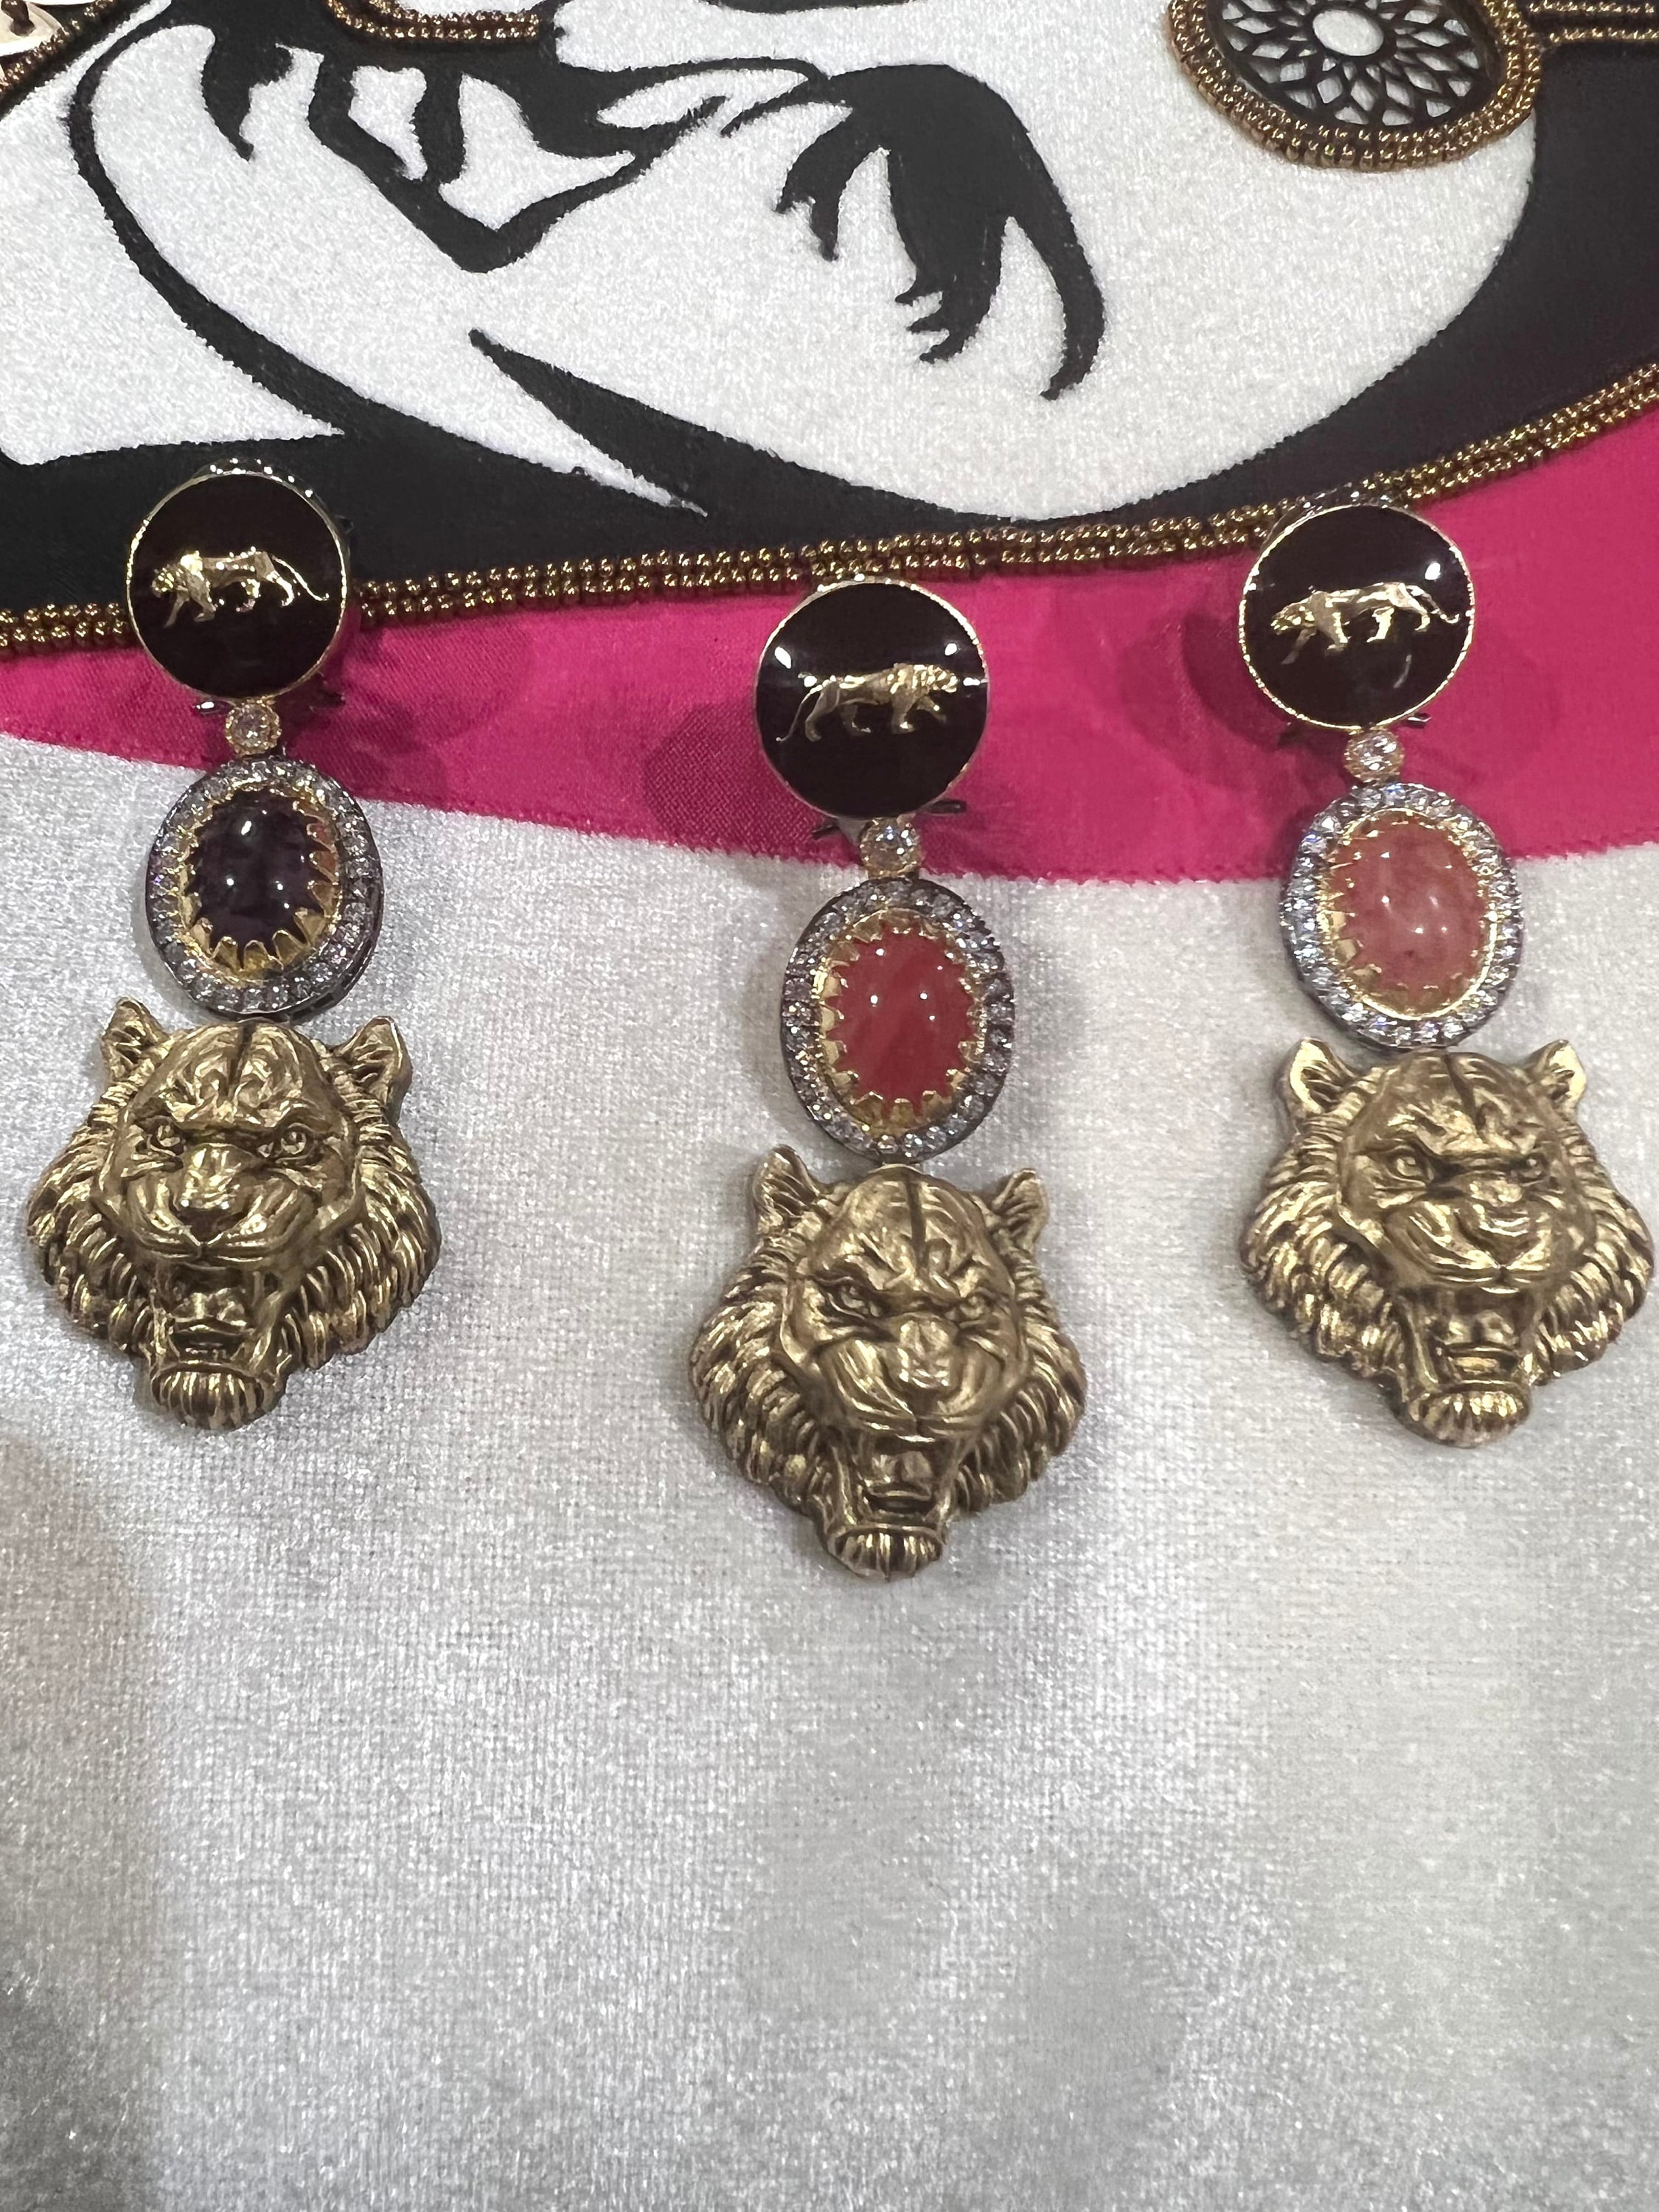 Sabyasachi Inspired Gold Plated Necklace Earrings Bridal Kundan Jewelry  Pakistan | eBay